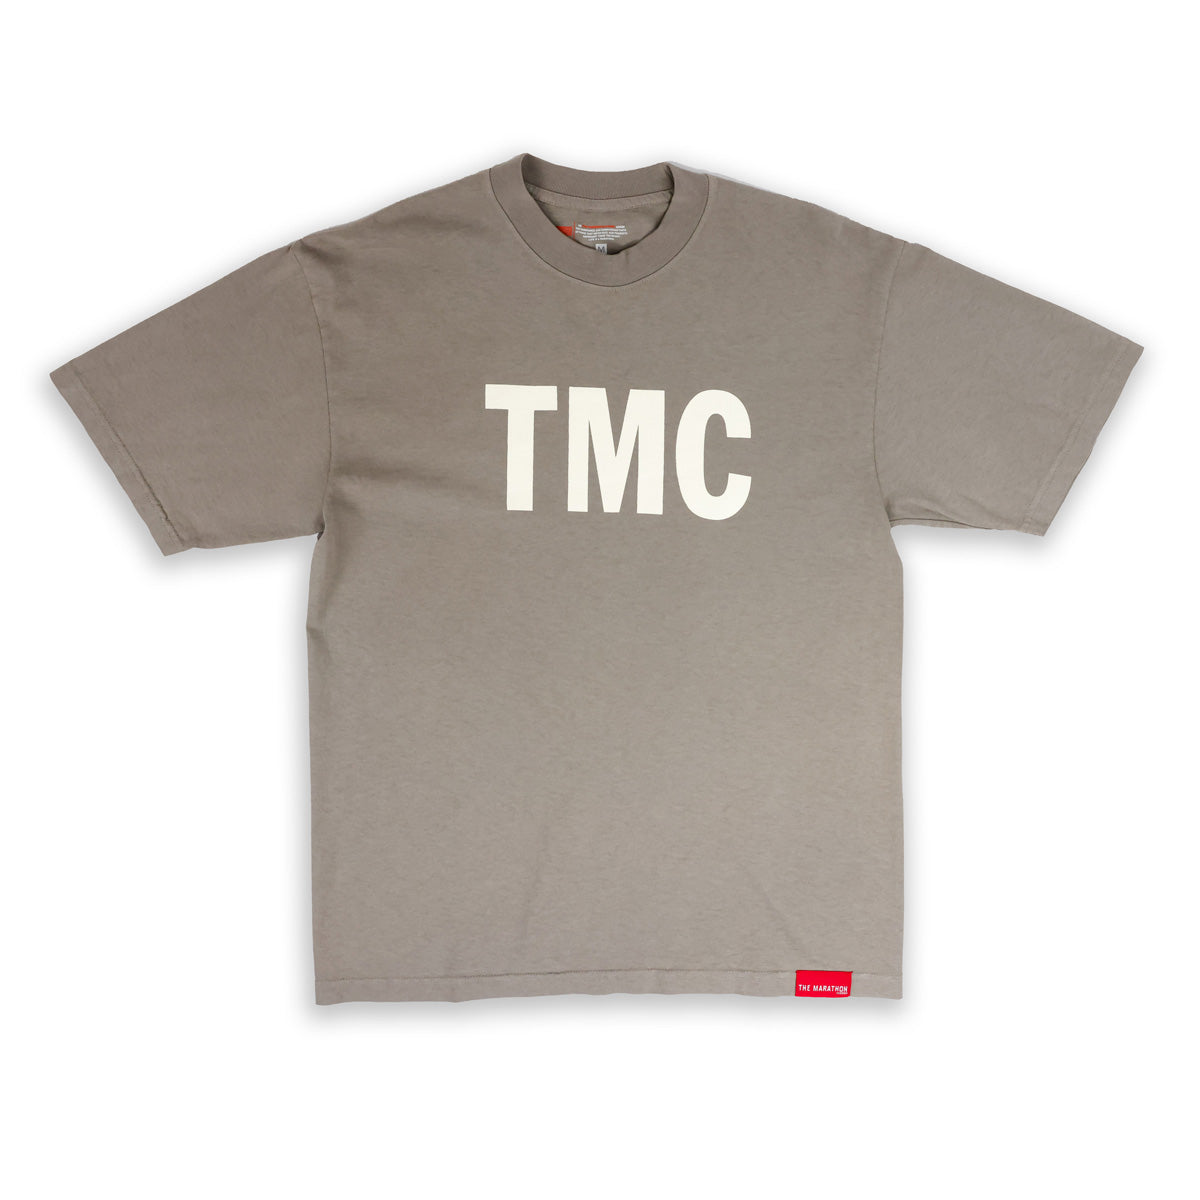 TMC T-Shirt - Mocha - Front